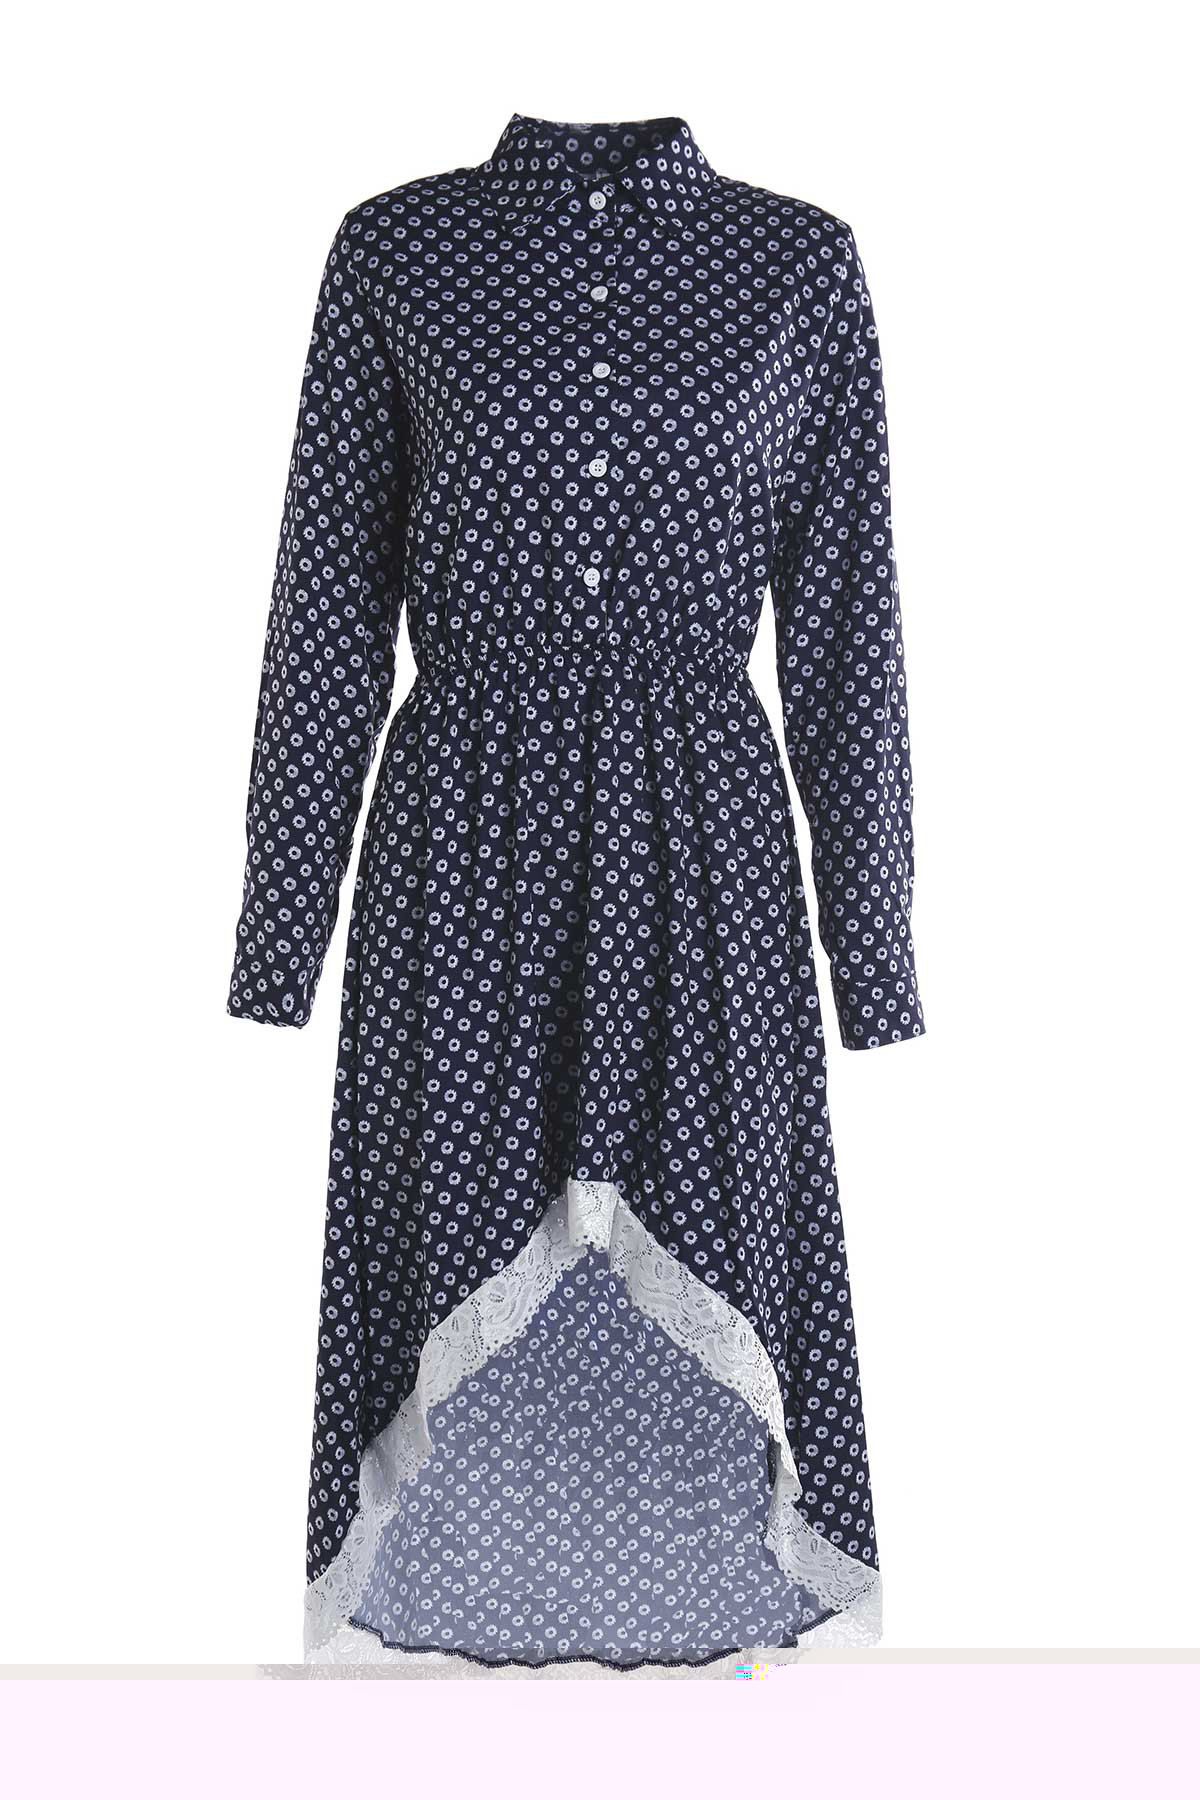 Long Sleeve Asymmetrical Polka Dot Dress - PURPLISH BLUE XL